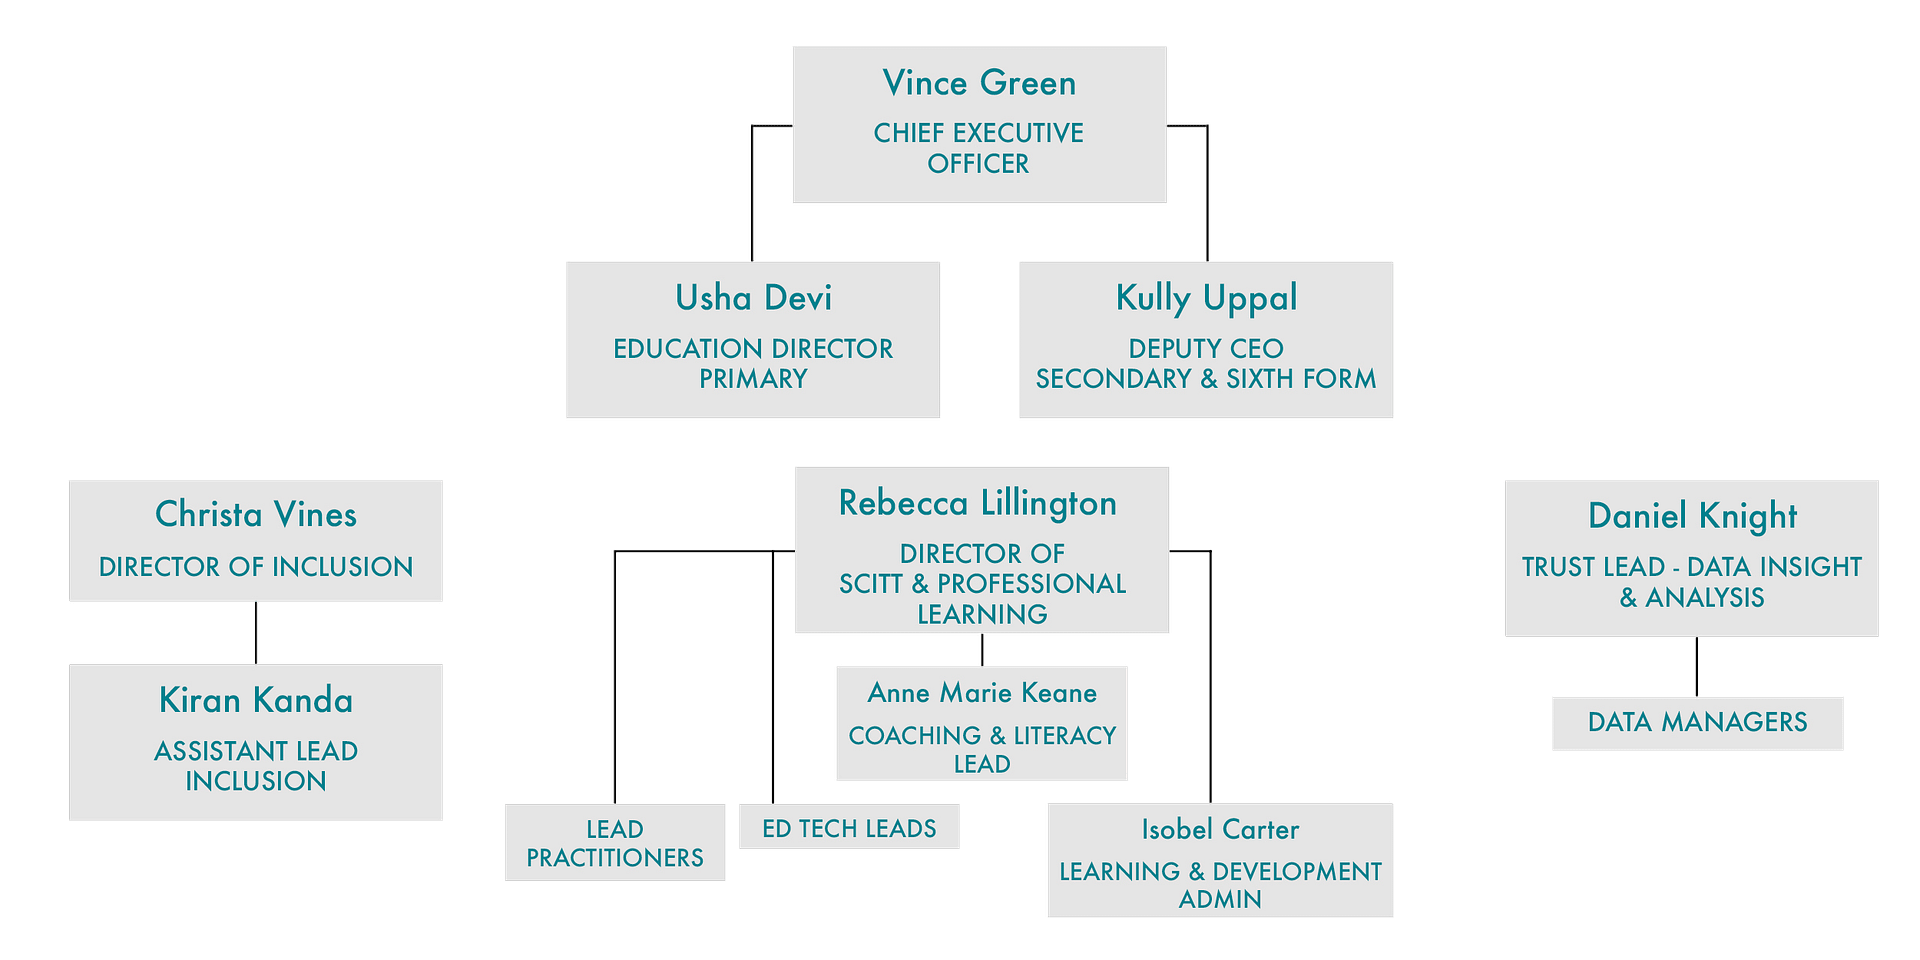 A diagram of the organization of an organization